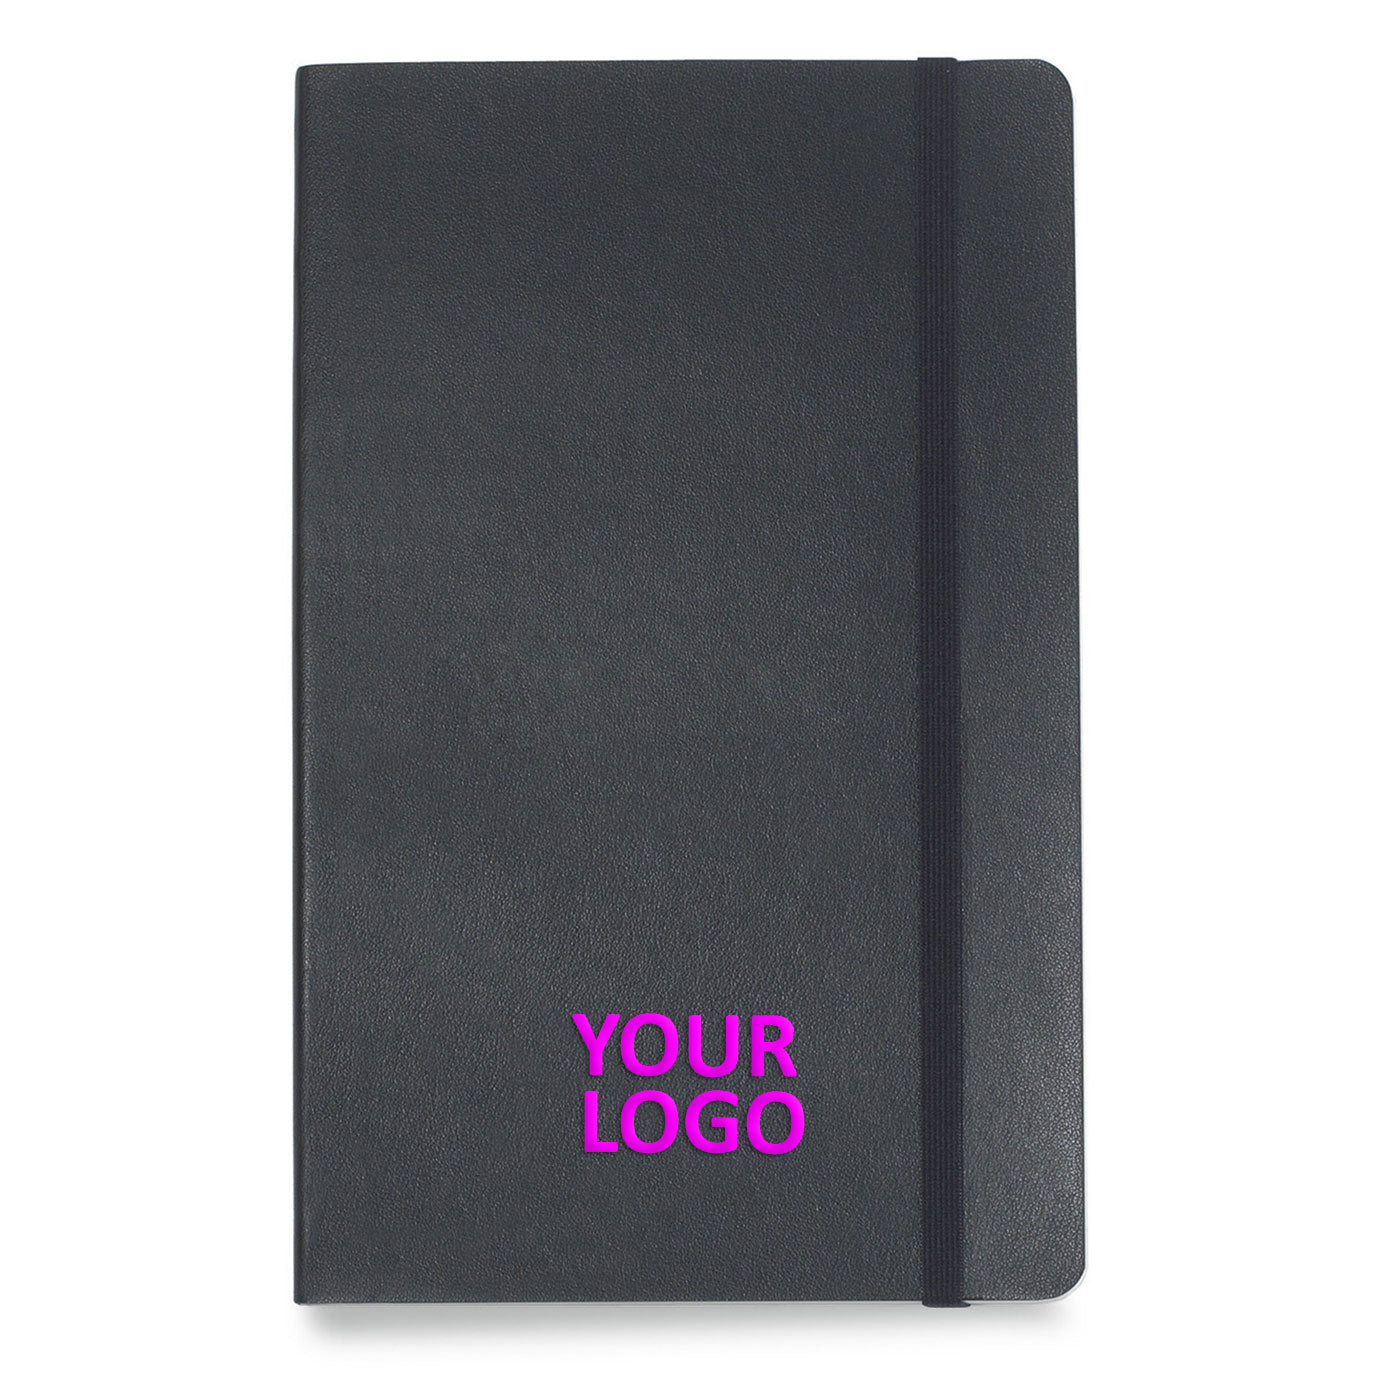 Moleskine Soft Cover Ruled Large Notebook Black